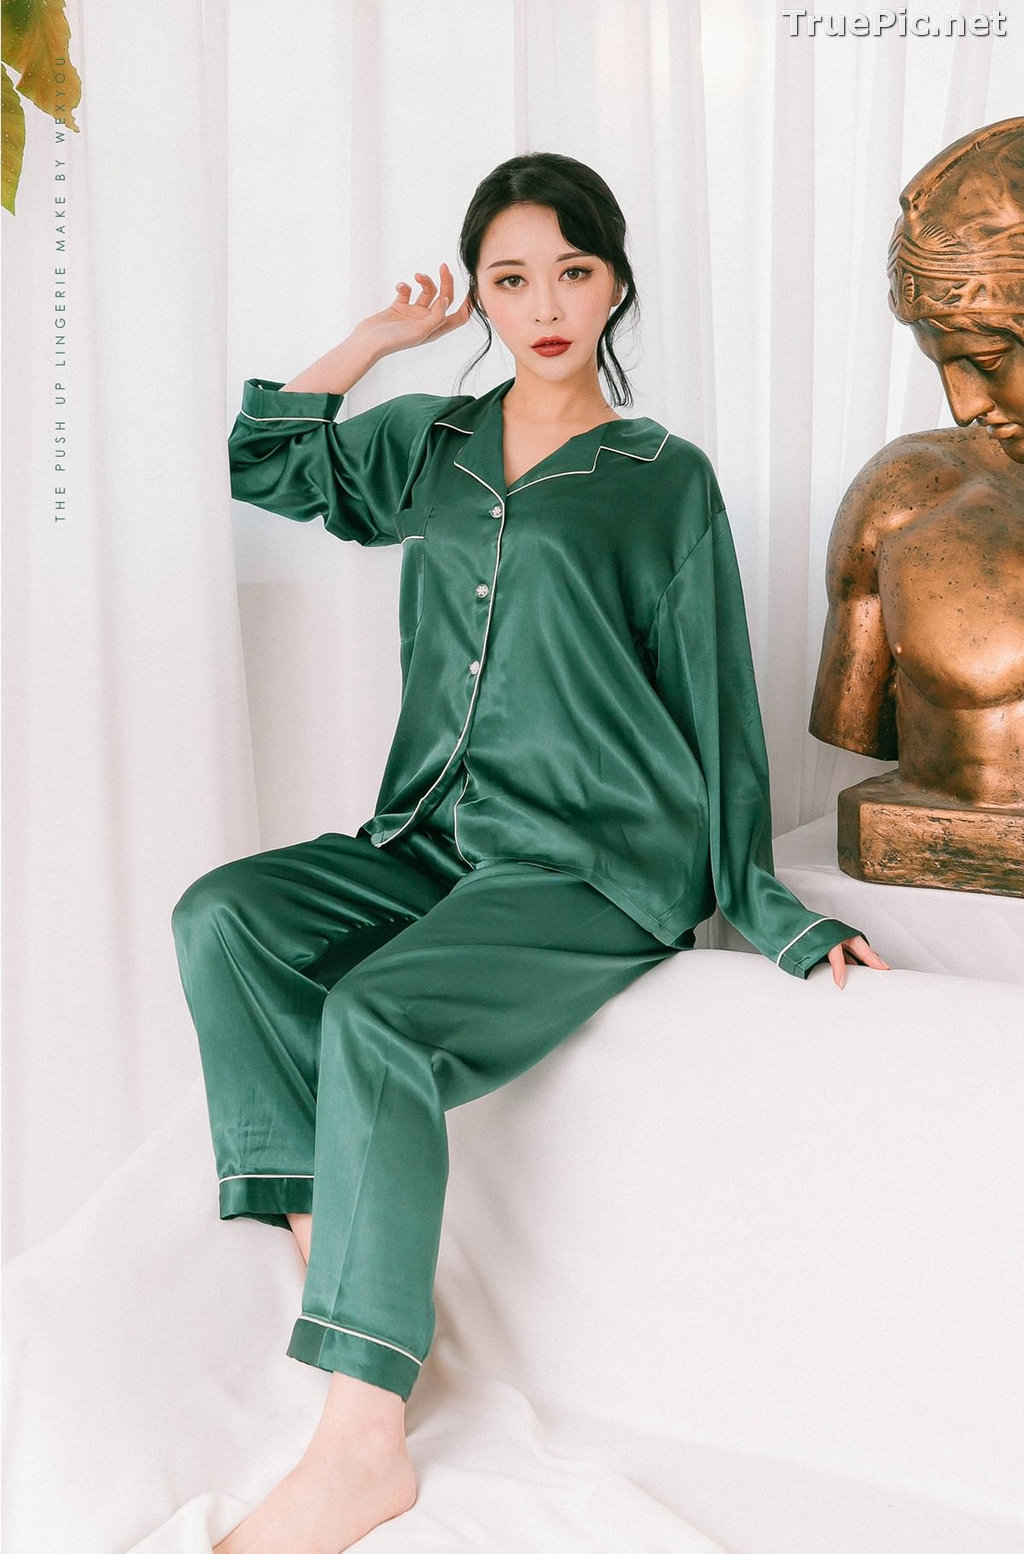 Image Ryu Hyeonju - Korean Fashion Model - Pijama and Lingerie Set - TruePic.net - Picture-20